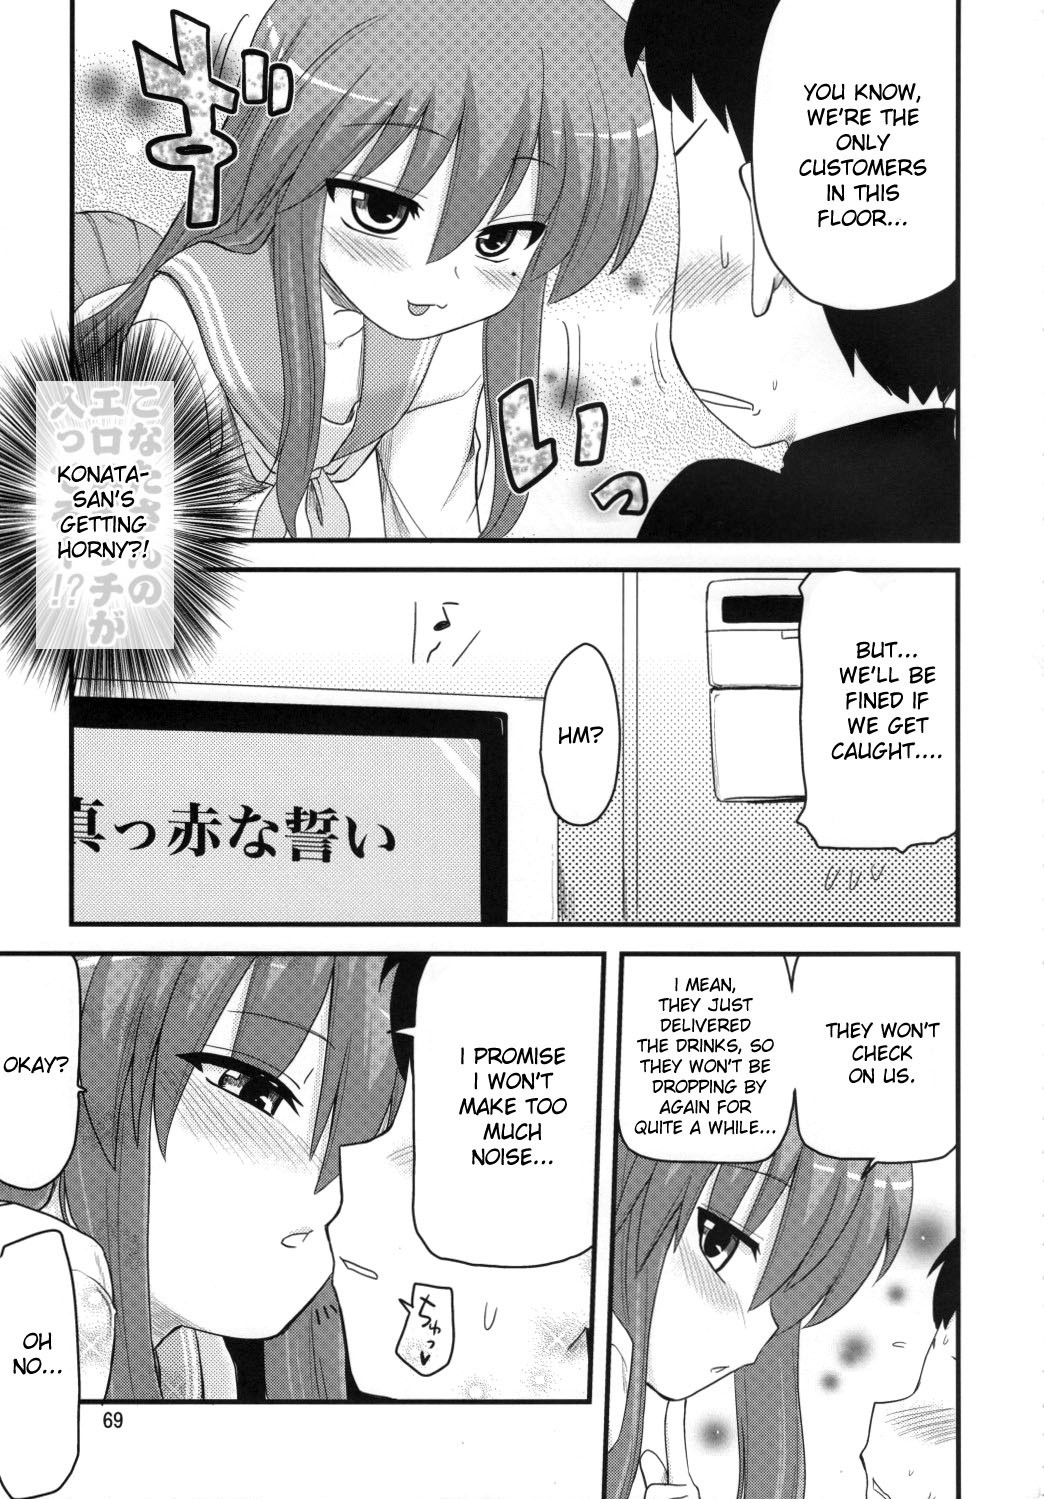 Konata and Oh-zu 4 people each and every one + 1 hentai manga picture 65